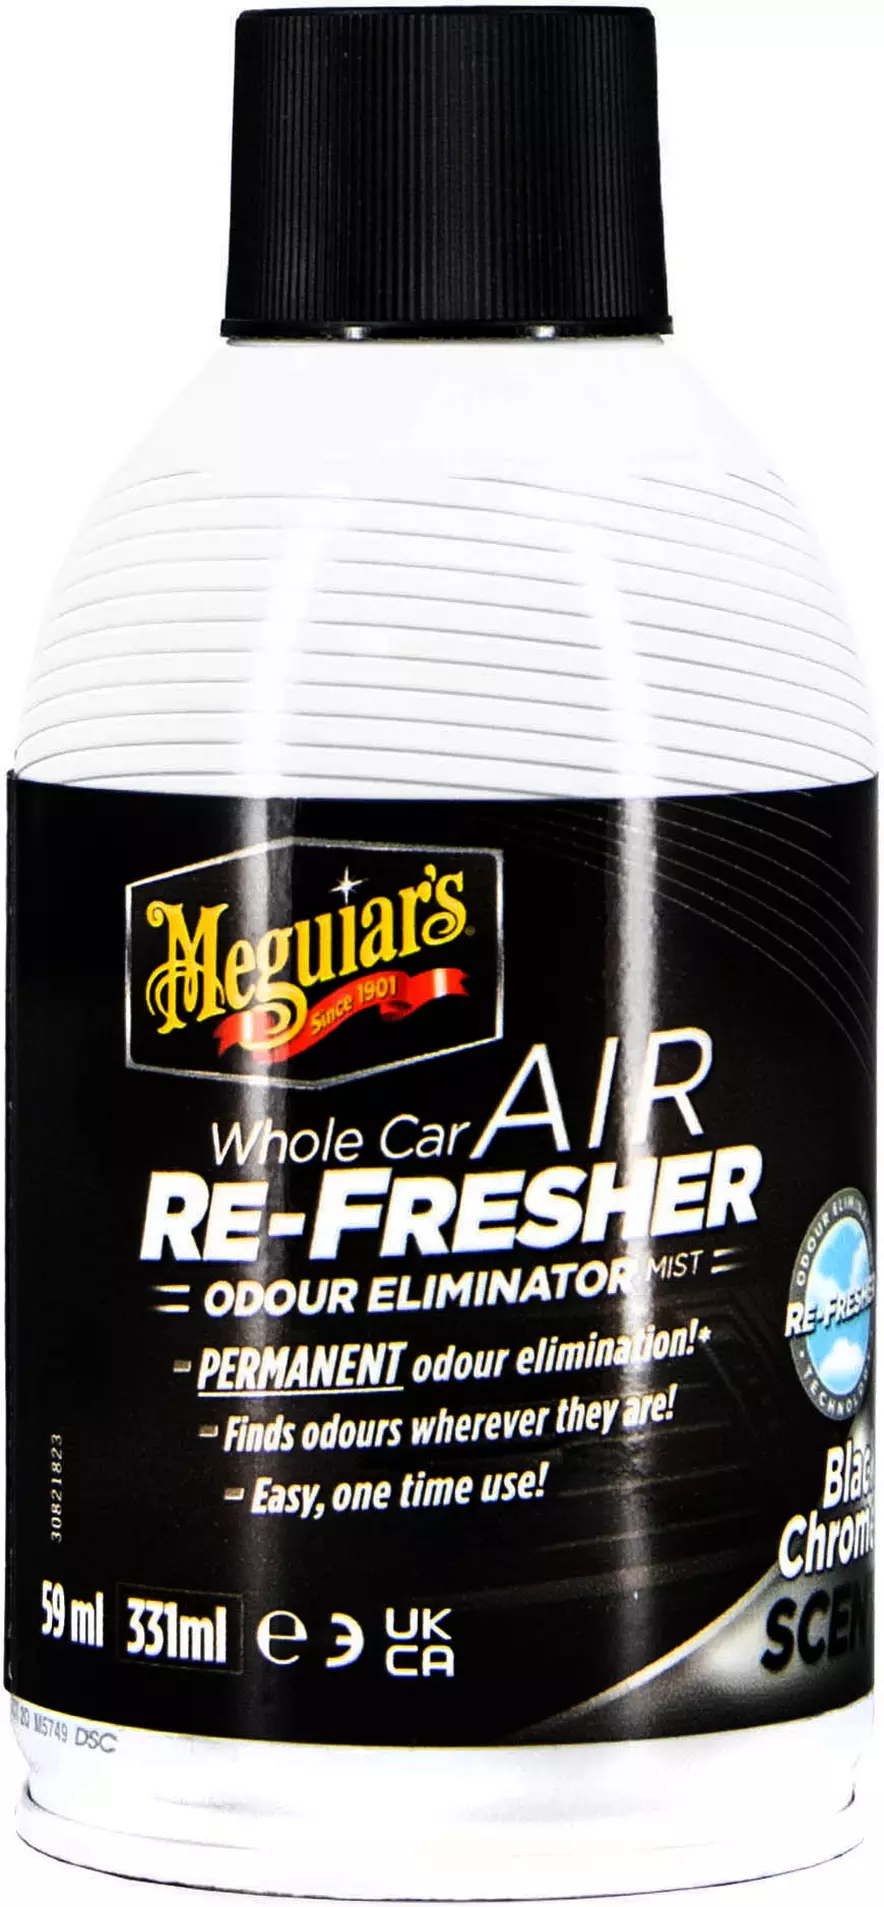 Meguiar's Air Re-Fresher, Whole Car, Black Chrome Scent - 57 g